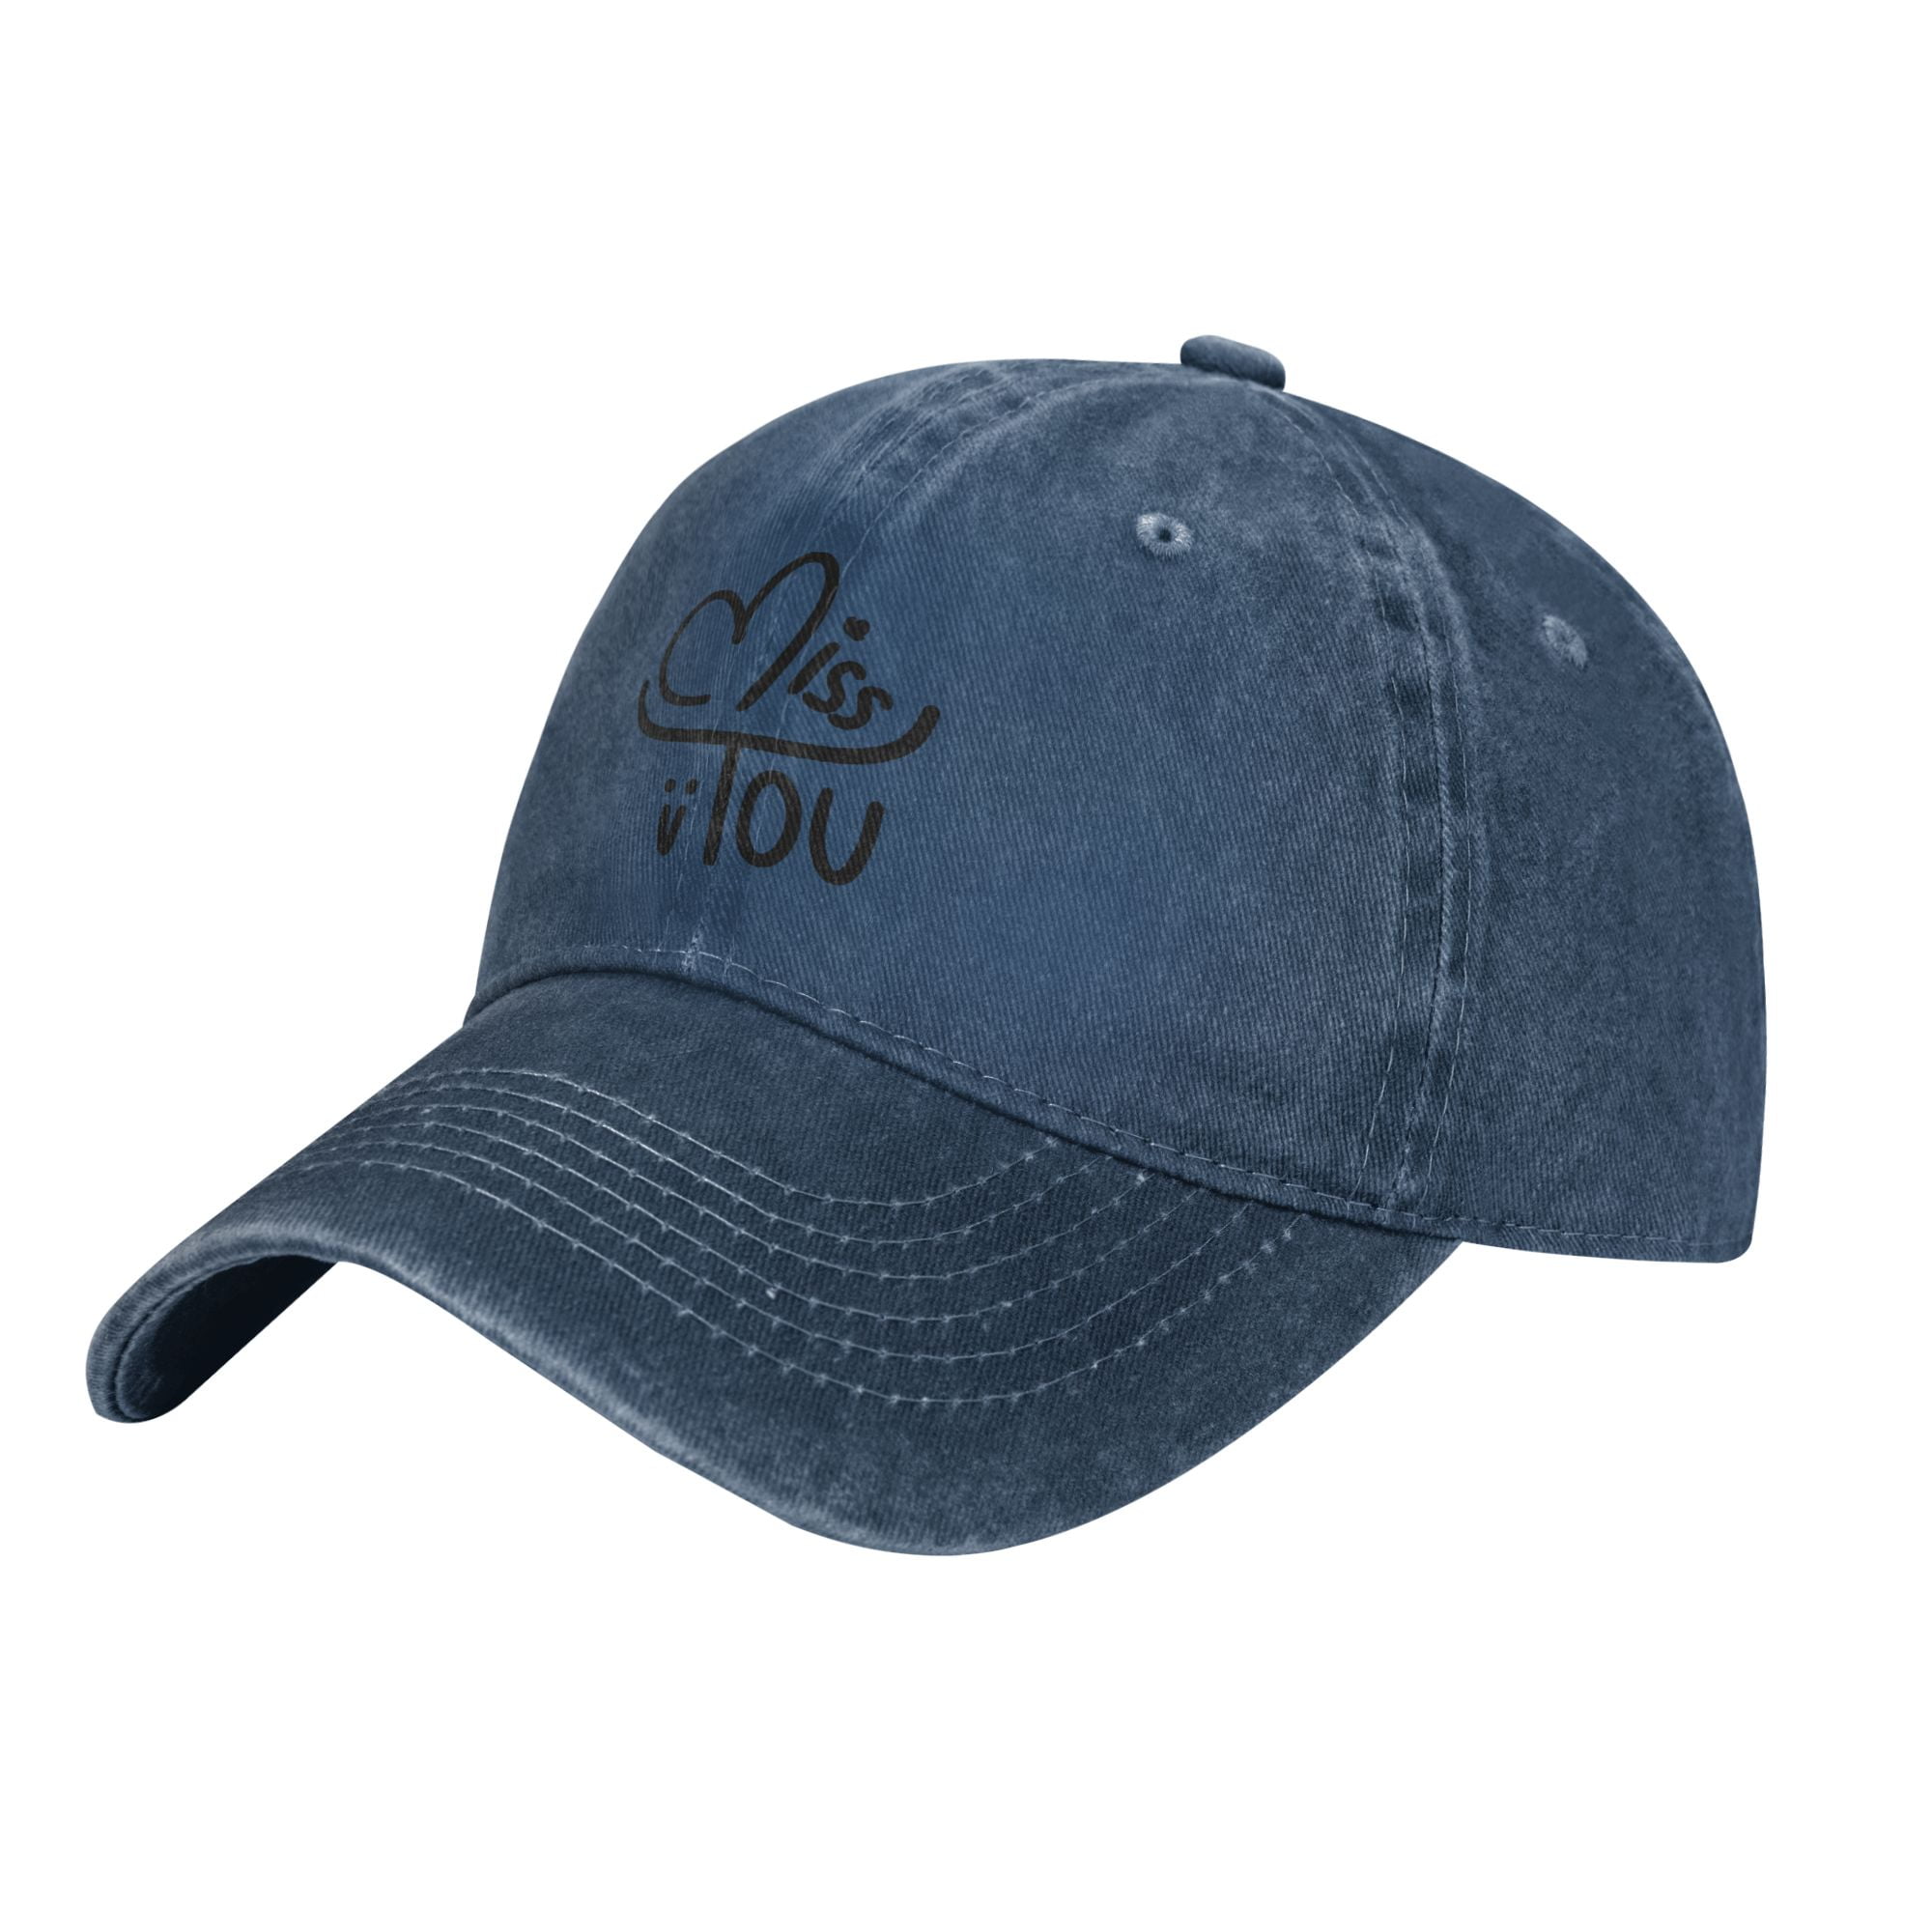 ZICANCN Mens Hats Unisex Baseball Caps-Doodle Cool Text Hats for Men  Baseball Cap Western Low Profile Hats Fashion 